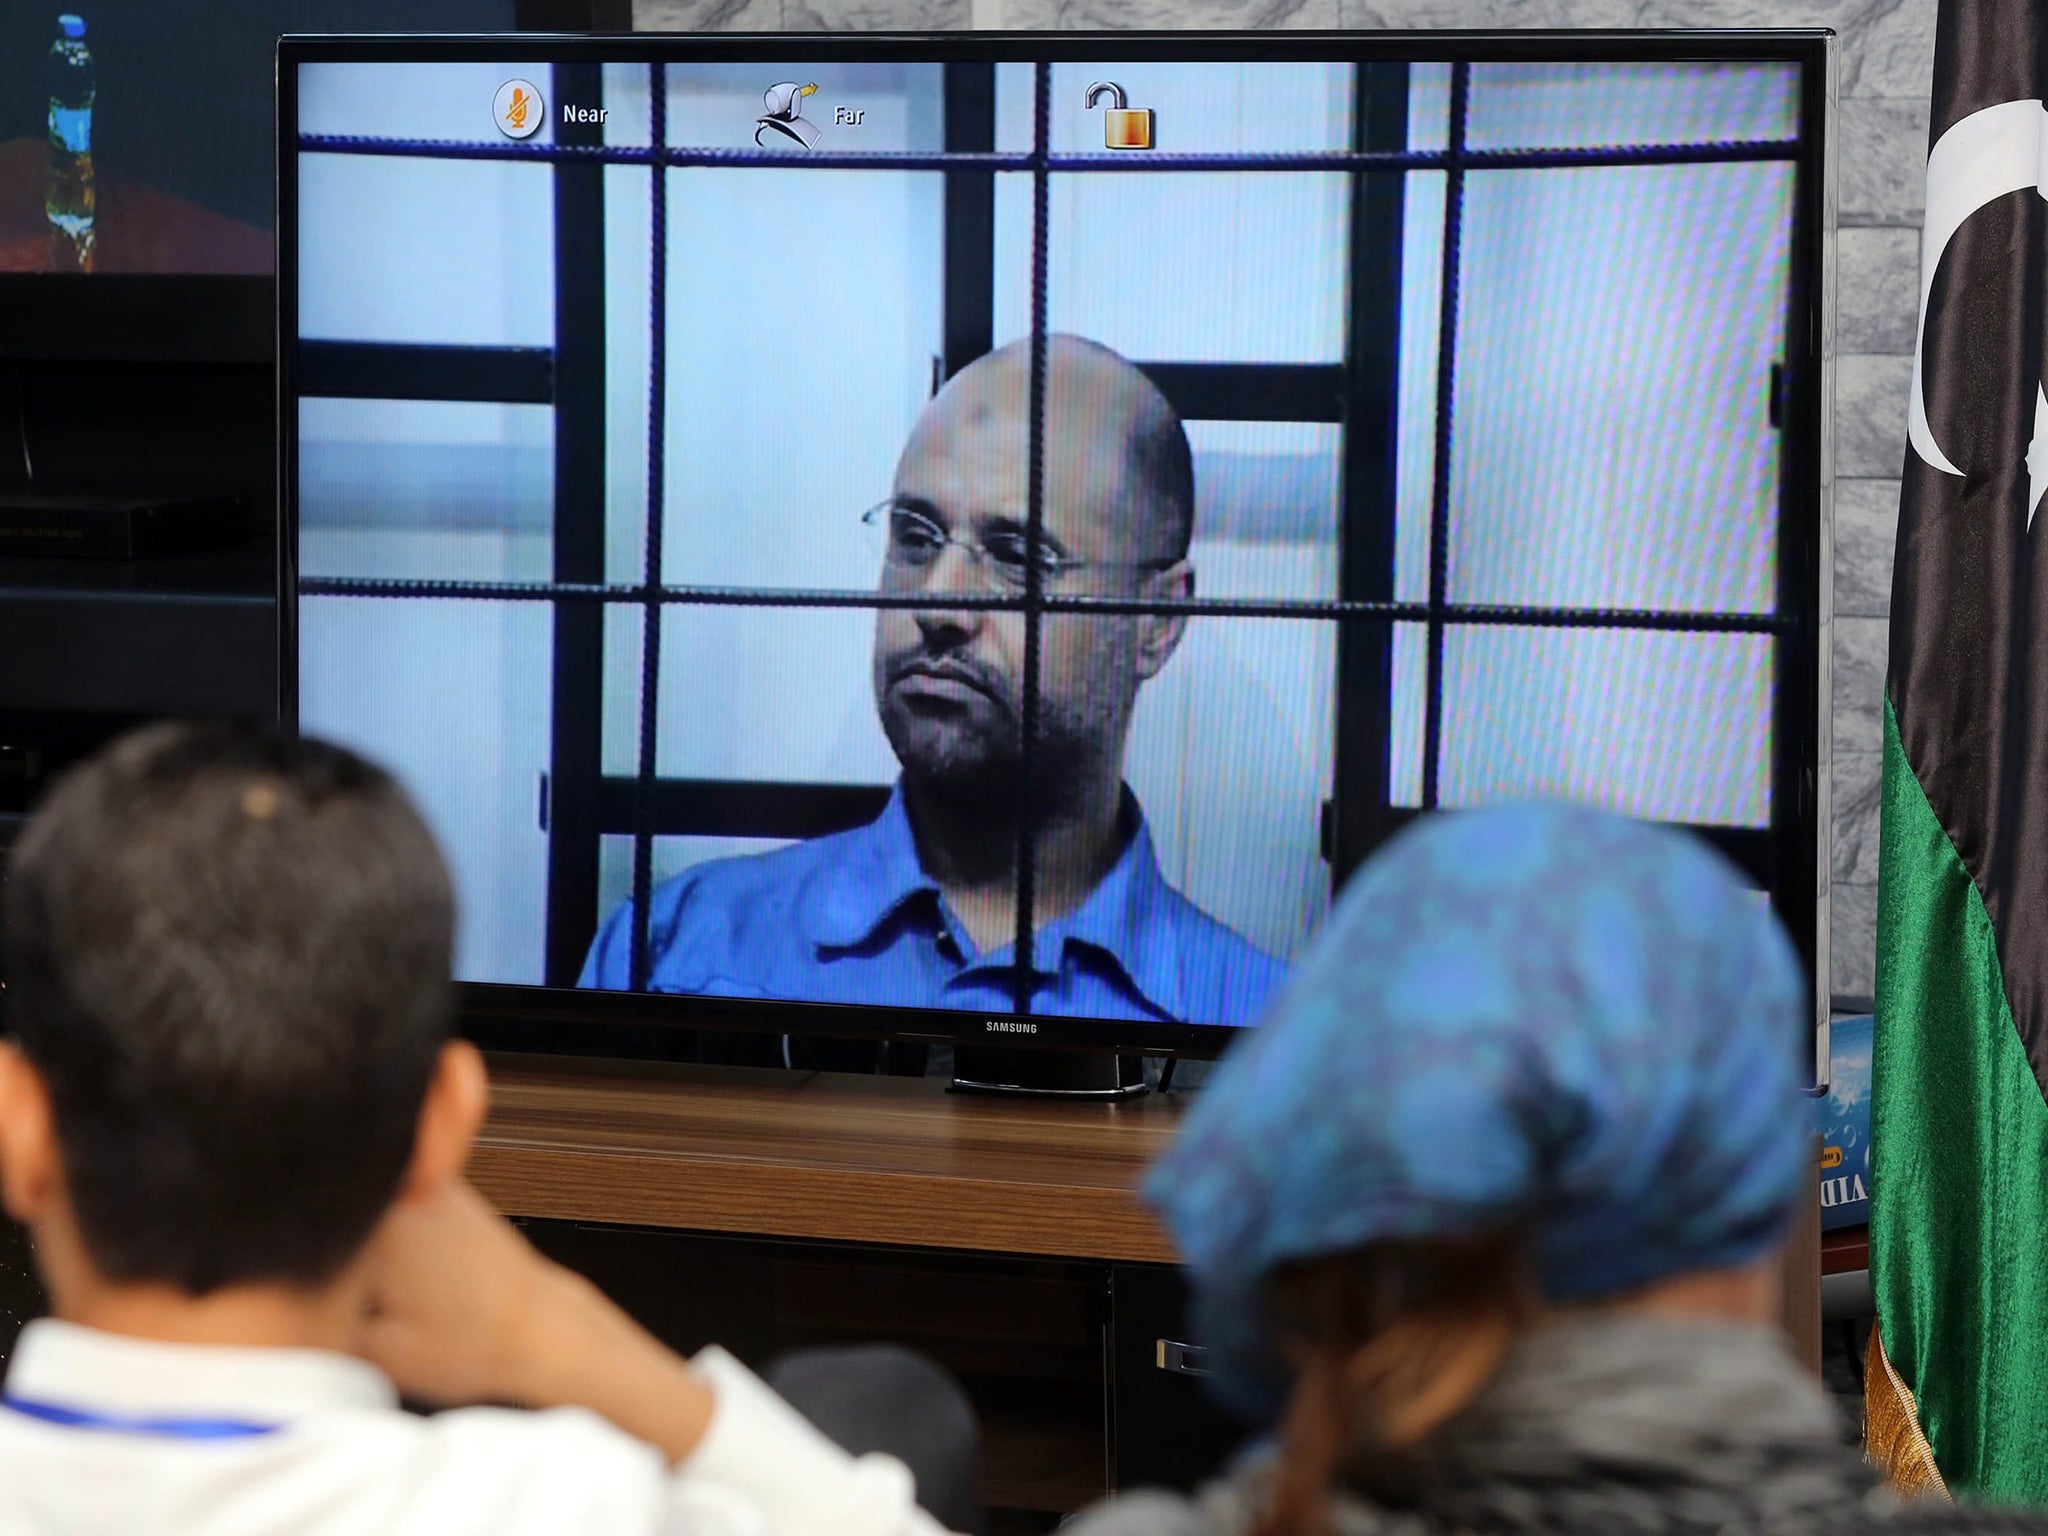 The detained Saif al-IslamGaddafi on court television in Libya last year